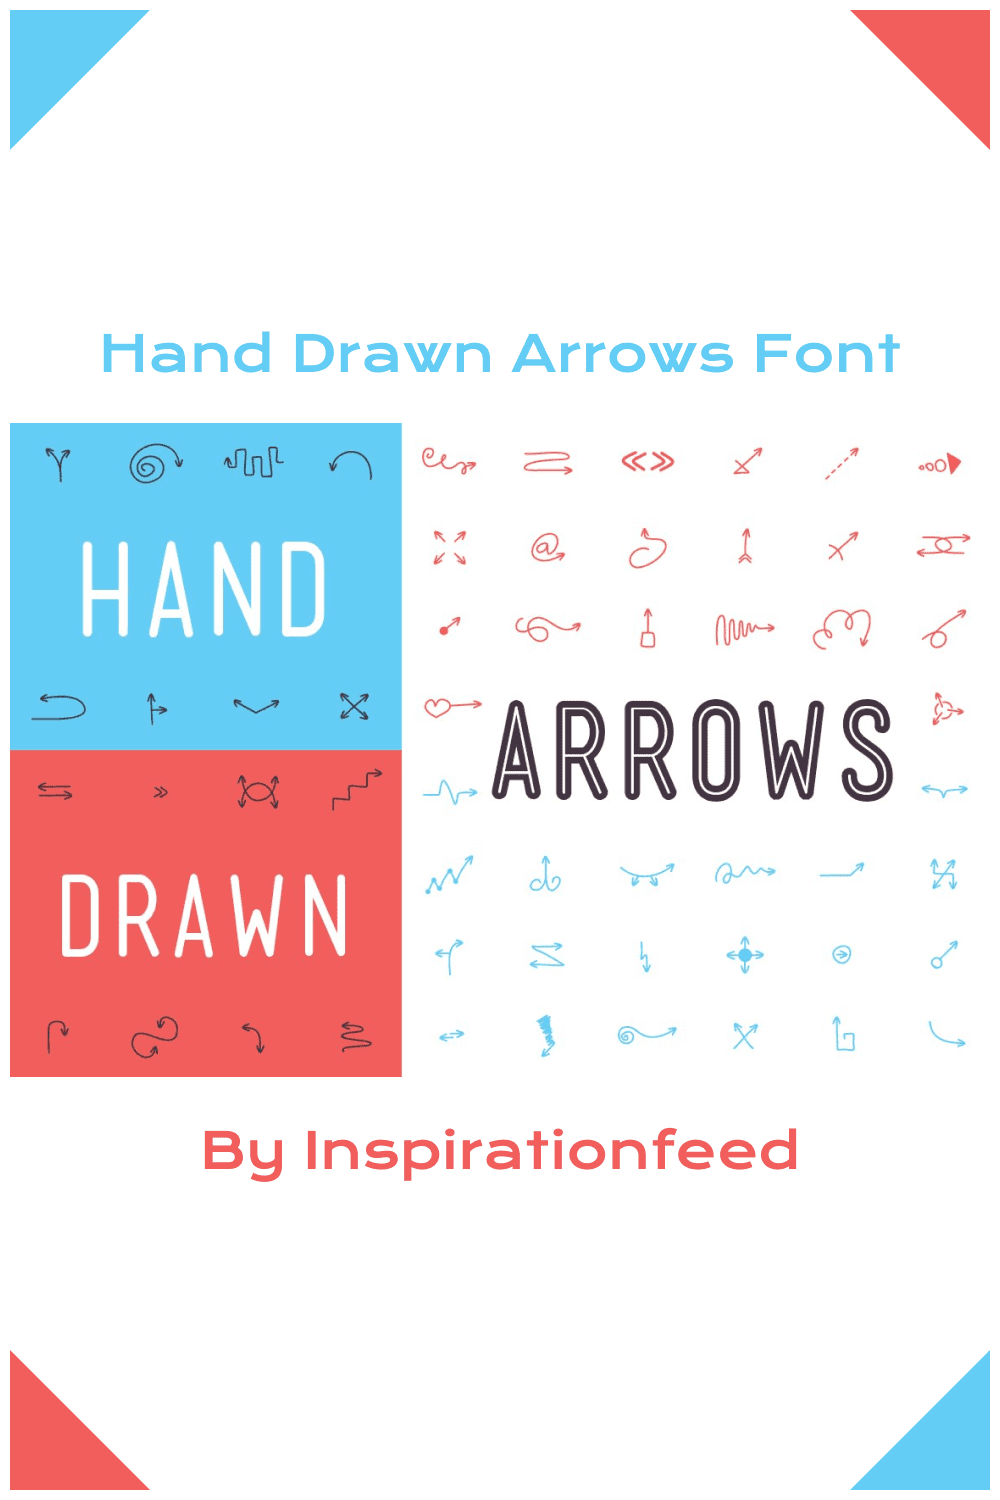 Hand Drawn Arrows Font.